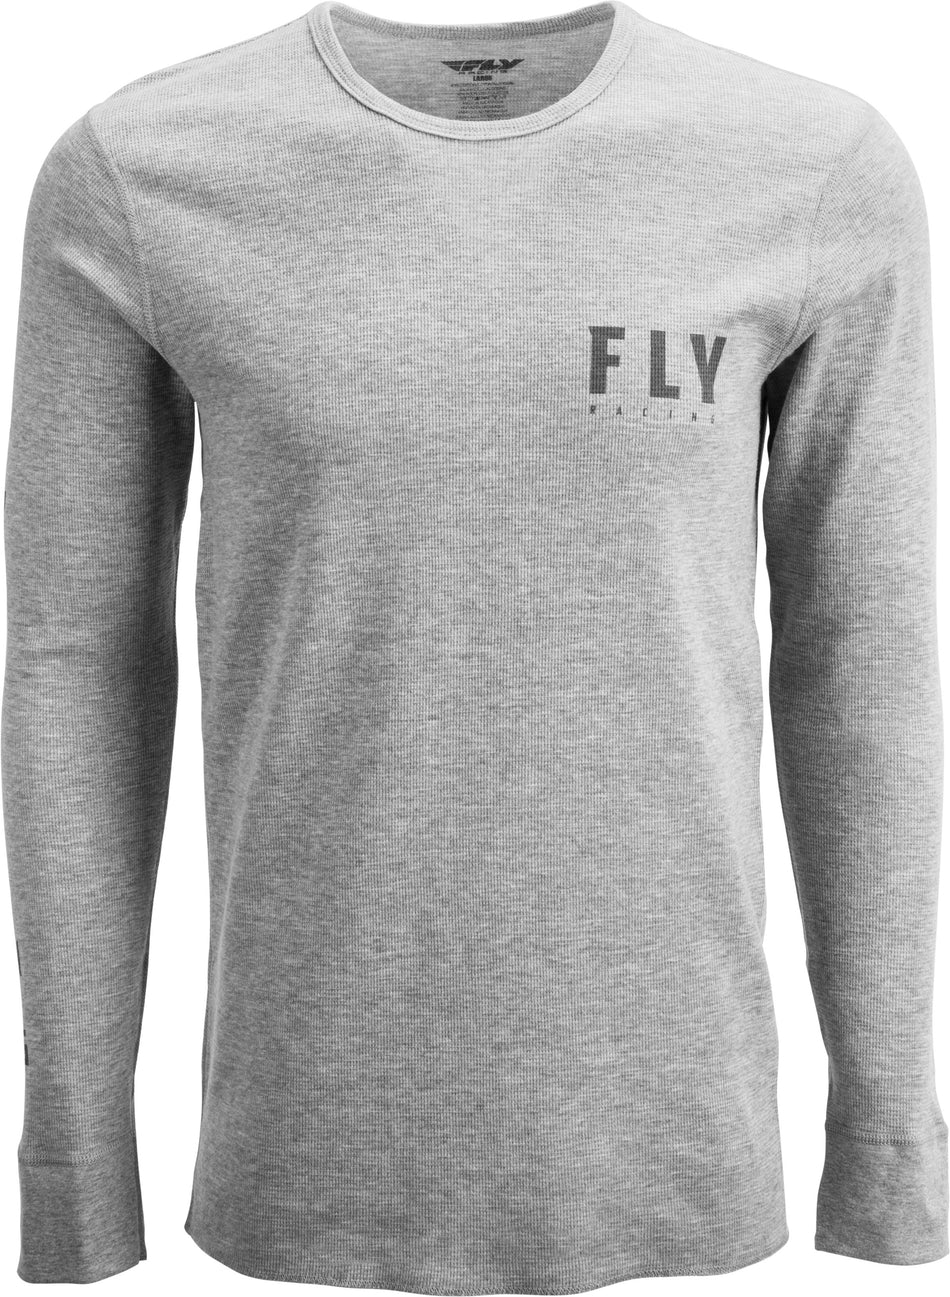 FLY RACING Fly Thermal Shirt Granite/Black Lg 352-4157L